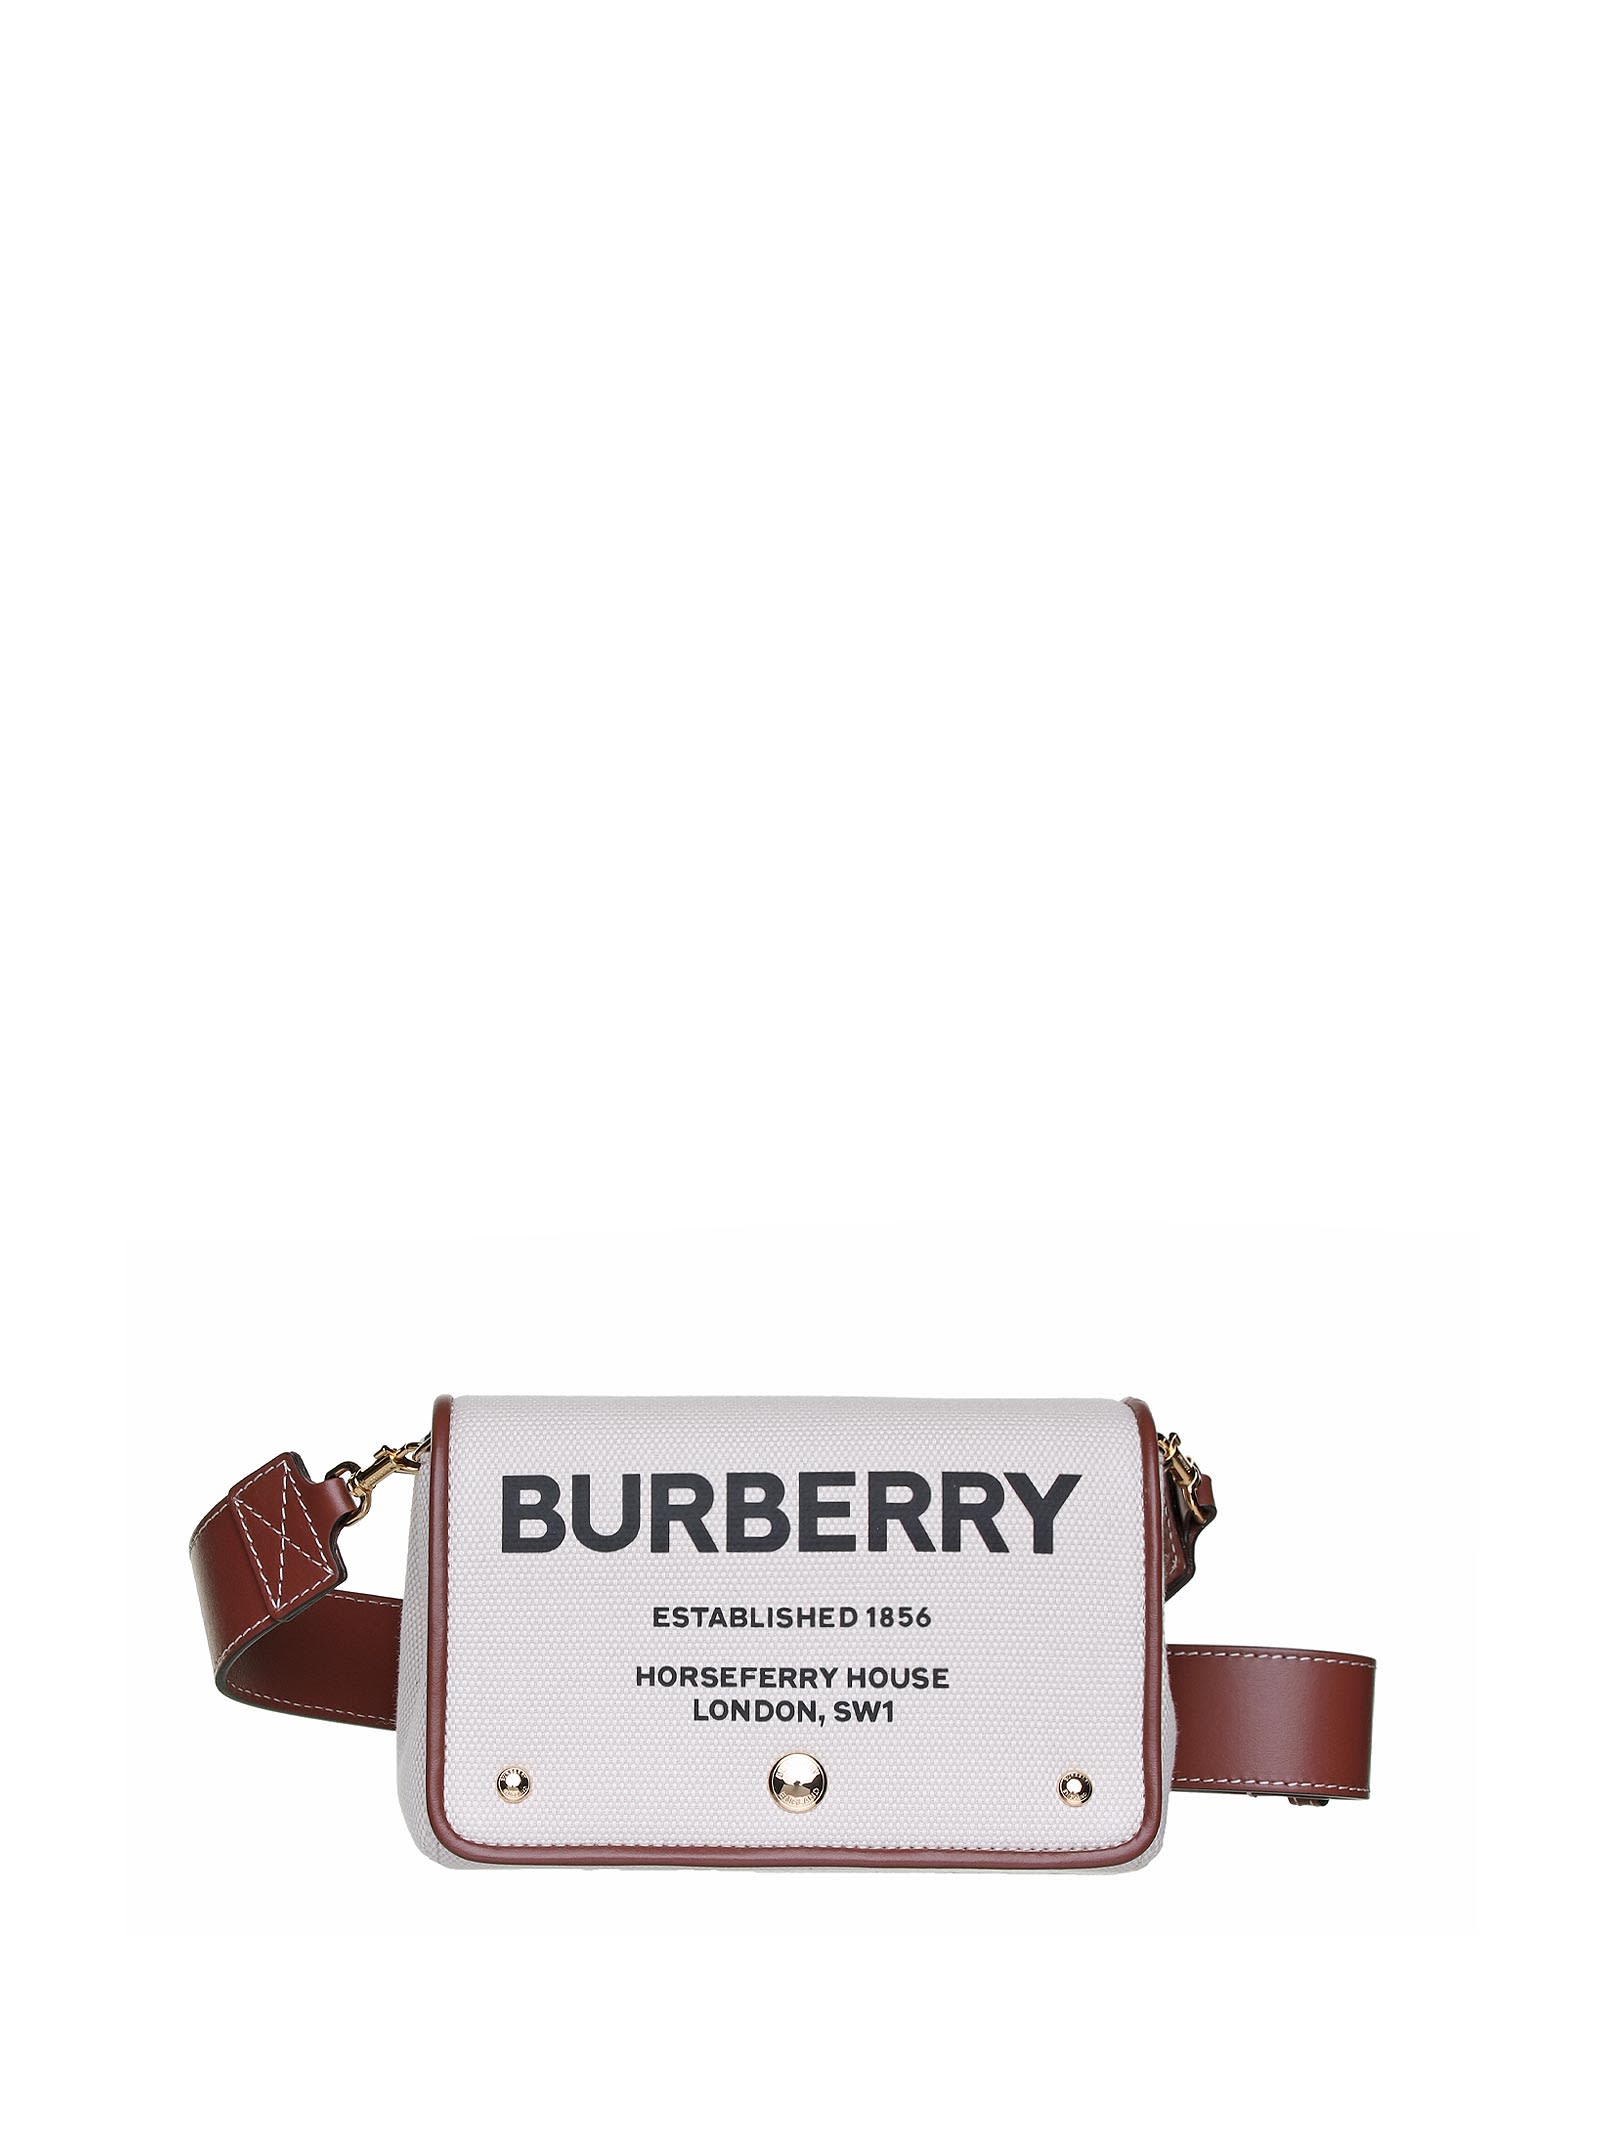 Burberry Shoulder Bag In White/tan